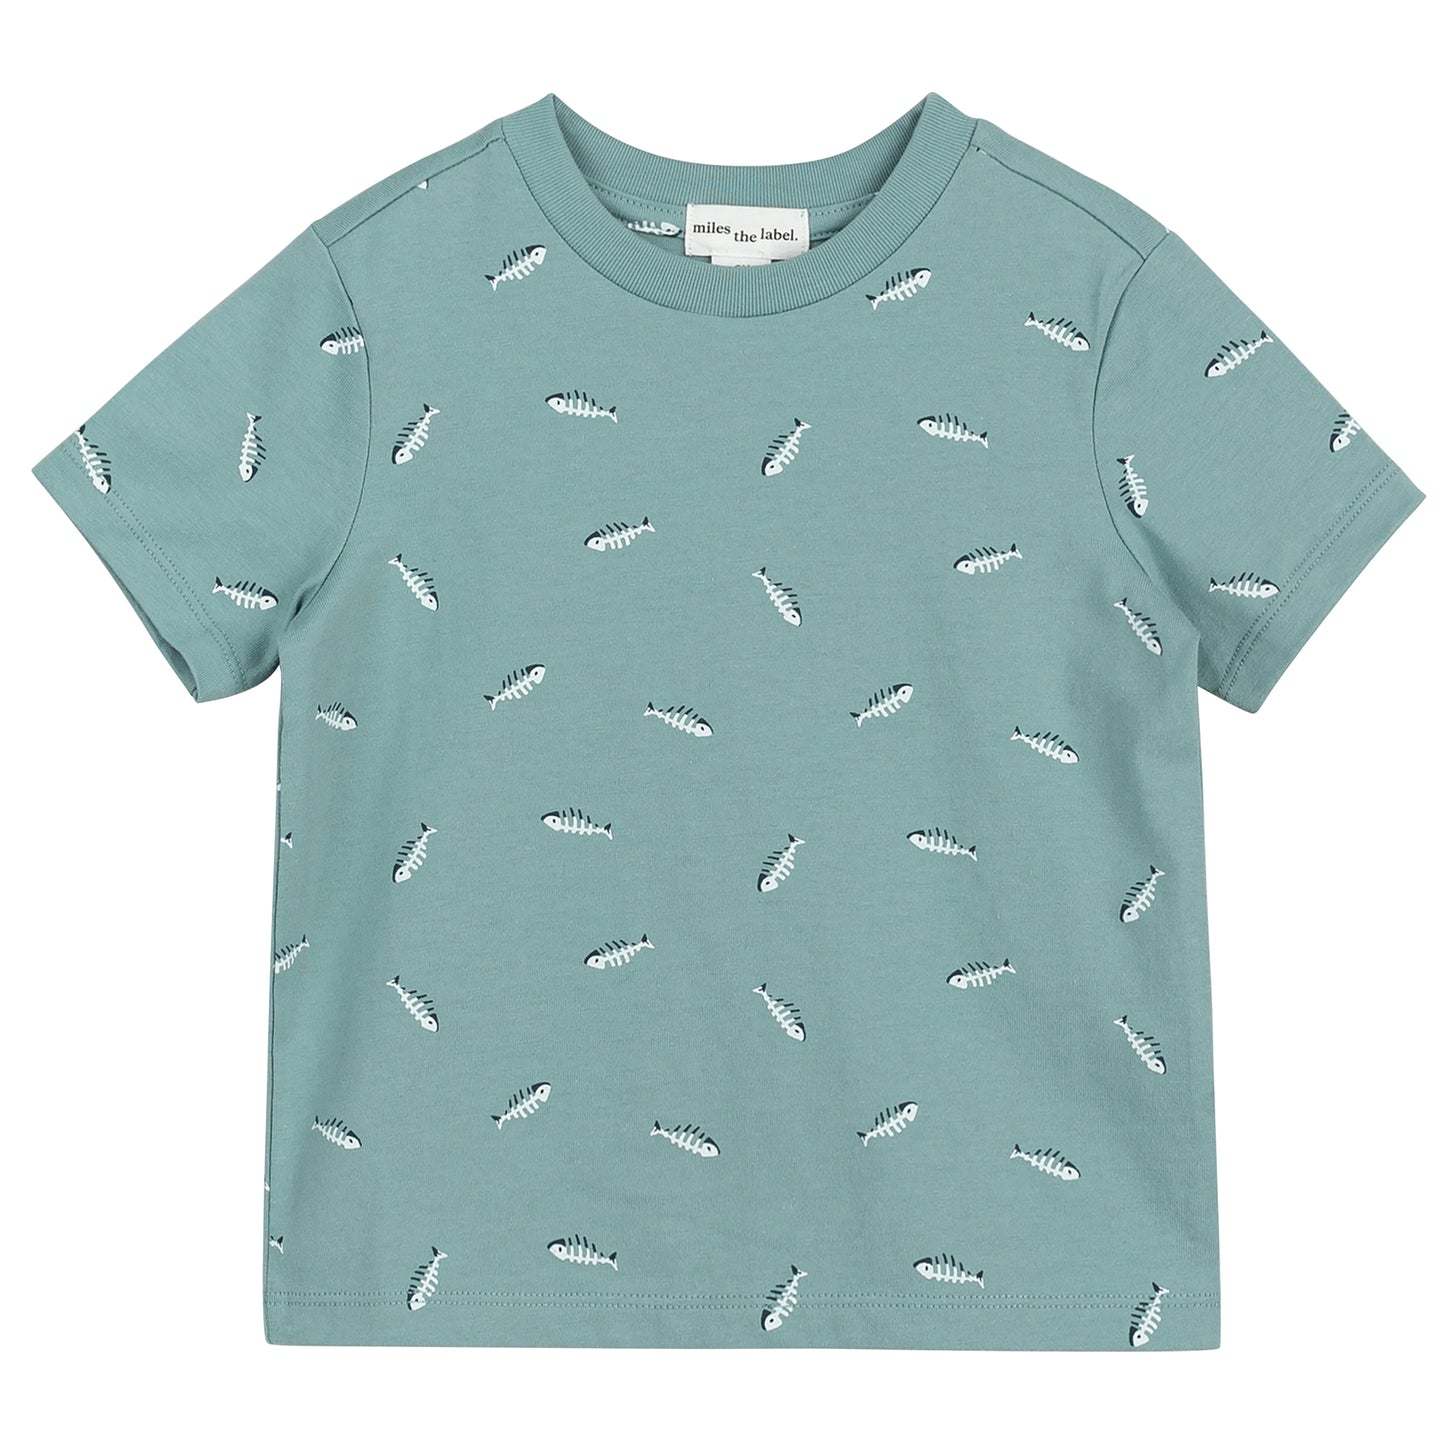 Fishbone T-Shirt